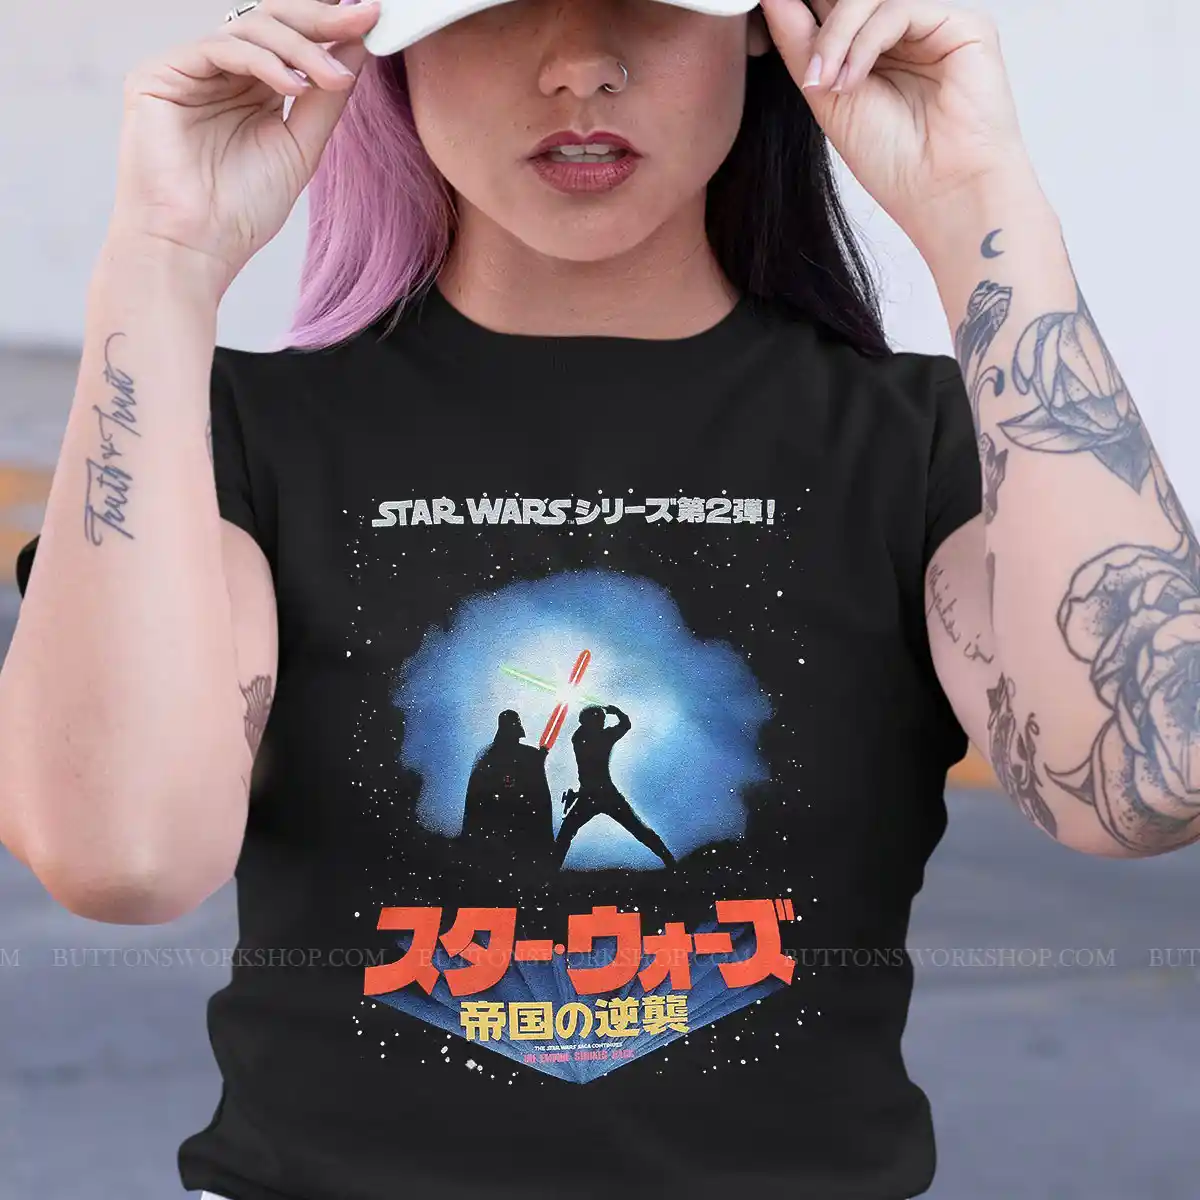 Star Wars Japanese Empire Strikes Back Poster T Shirt Unisex Tshirt